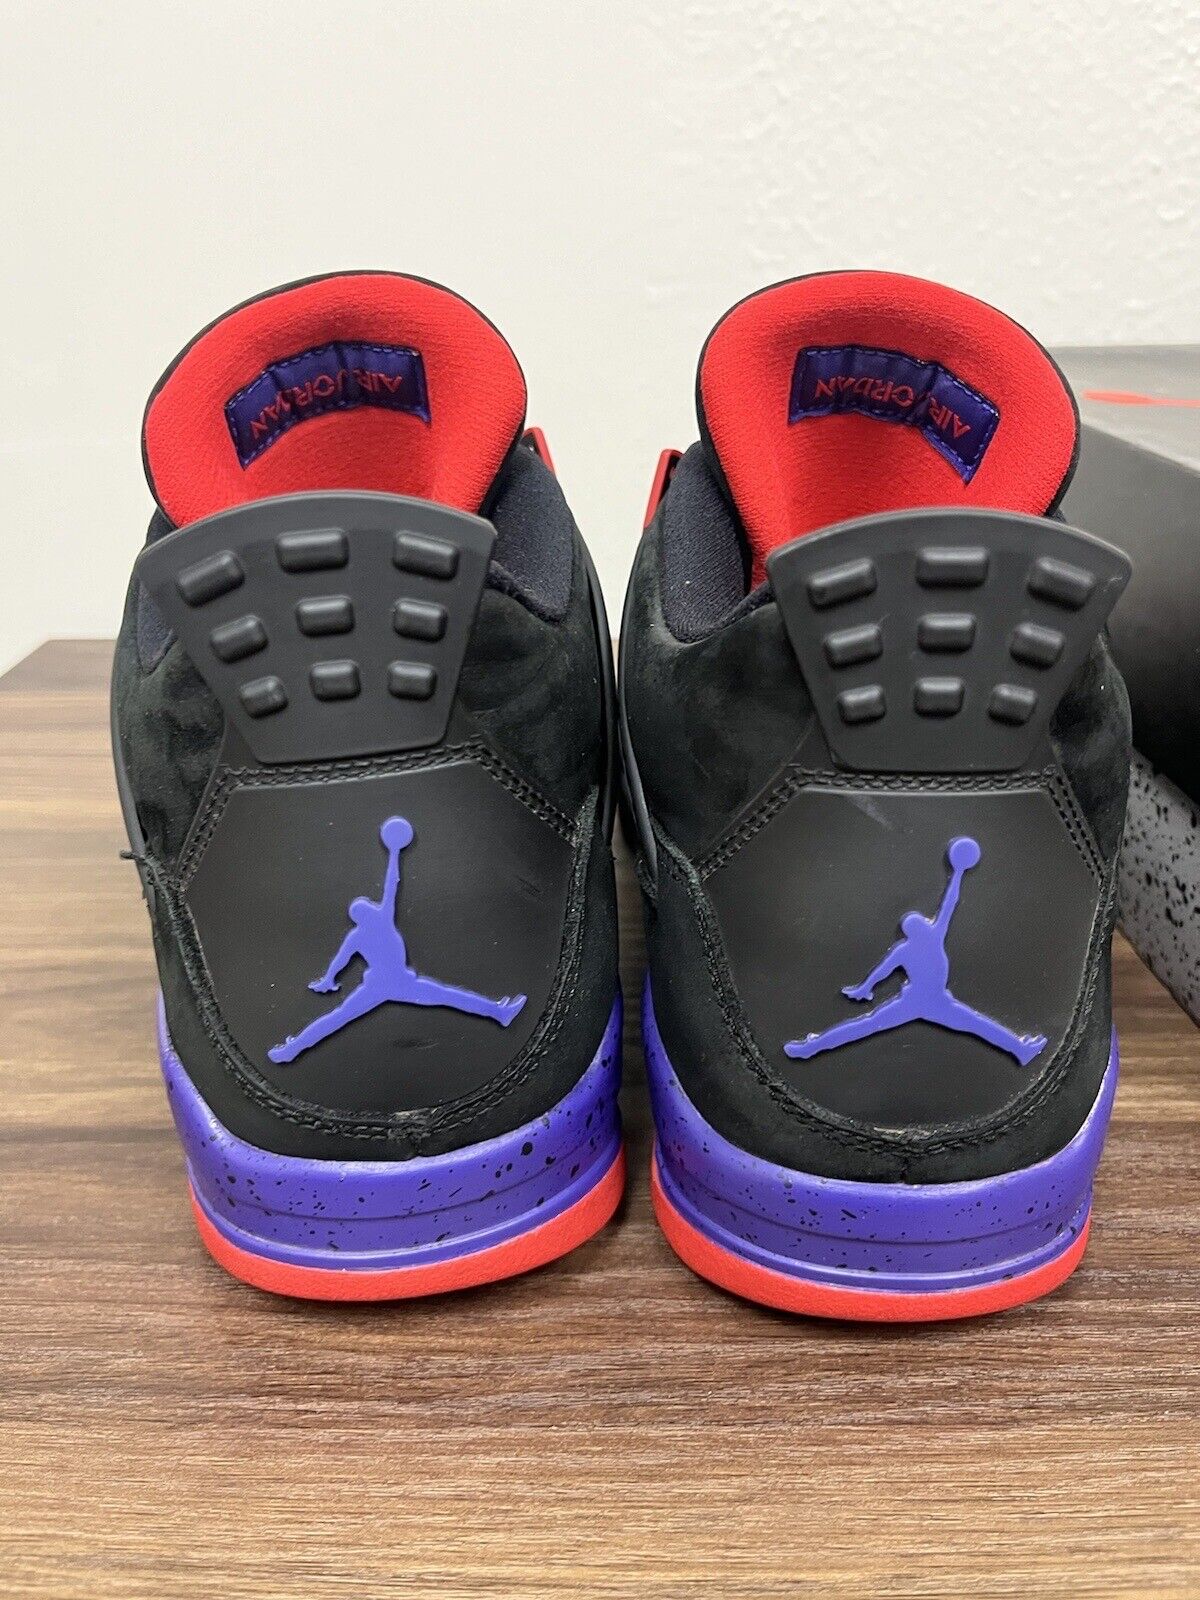 Nike Air Jordan 4 Retro NRG Raptors - Drake Signature 2019 Size 9.5